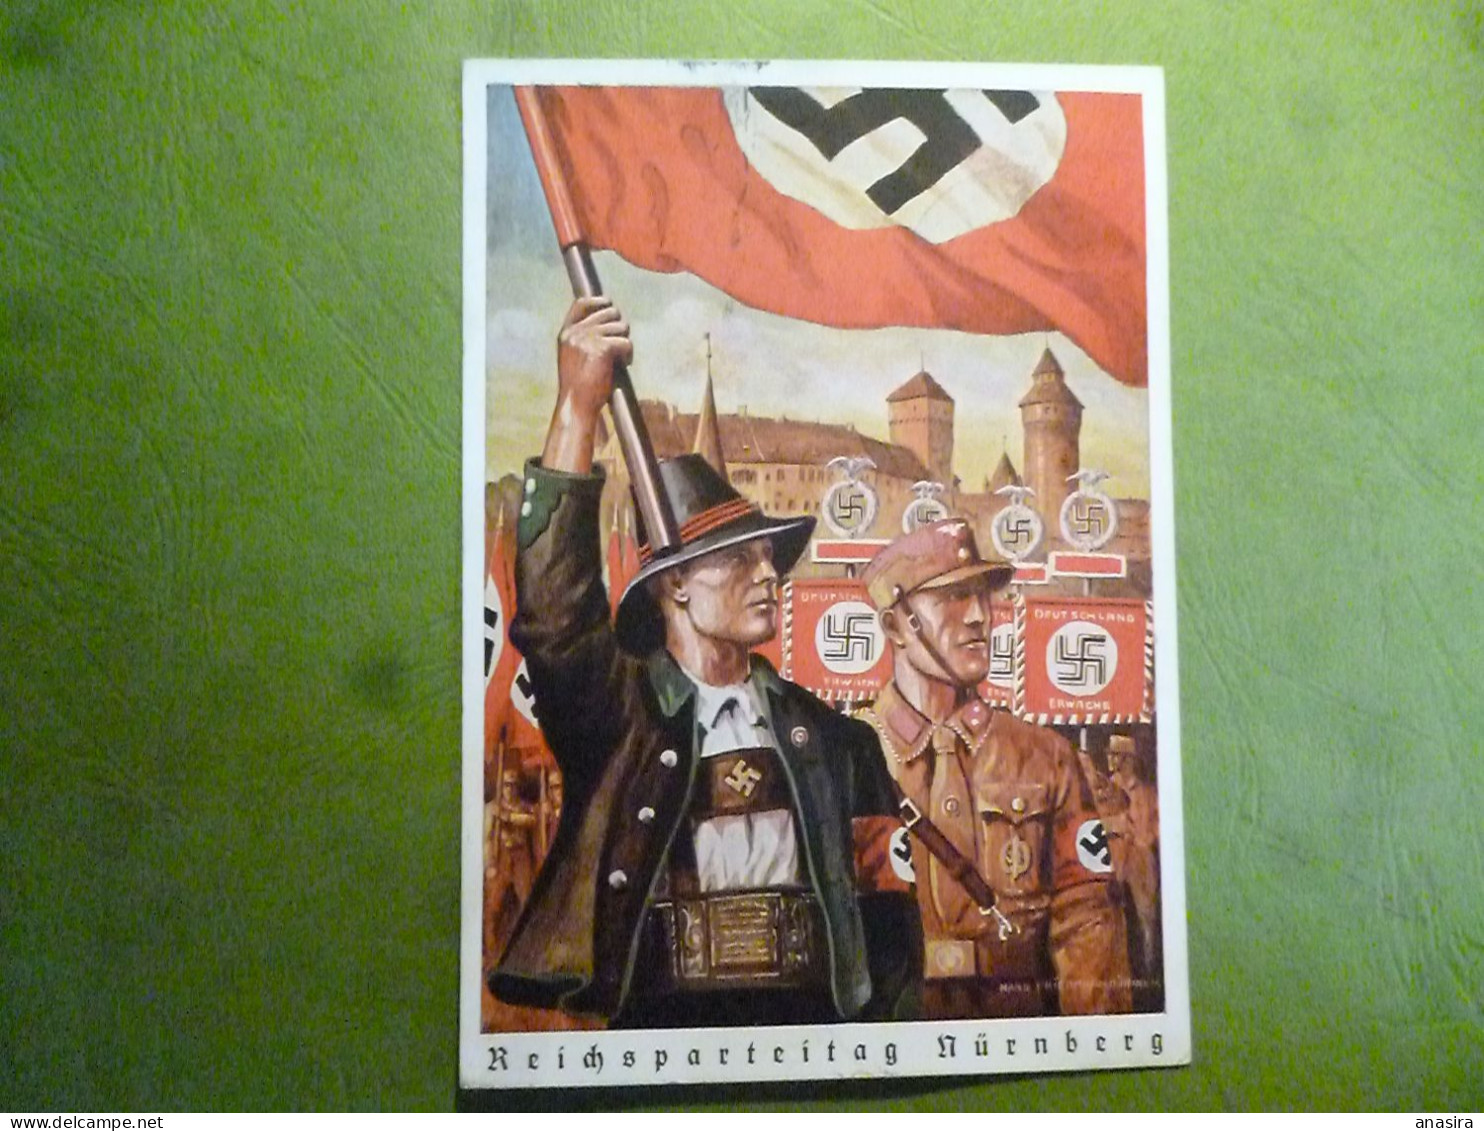 WW II   Nürnberg 1938 - War 1939-45